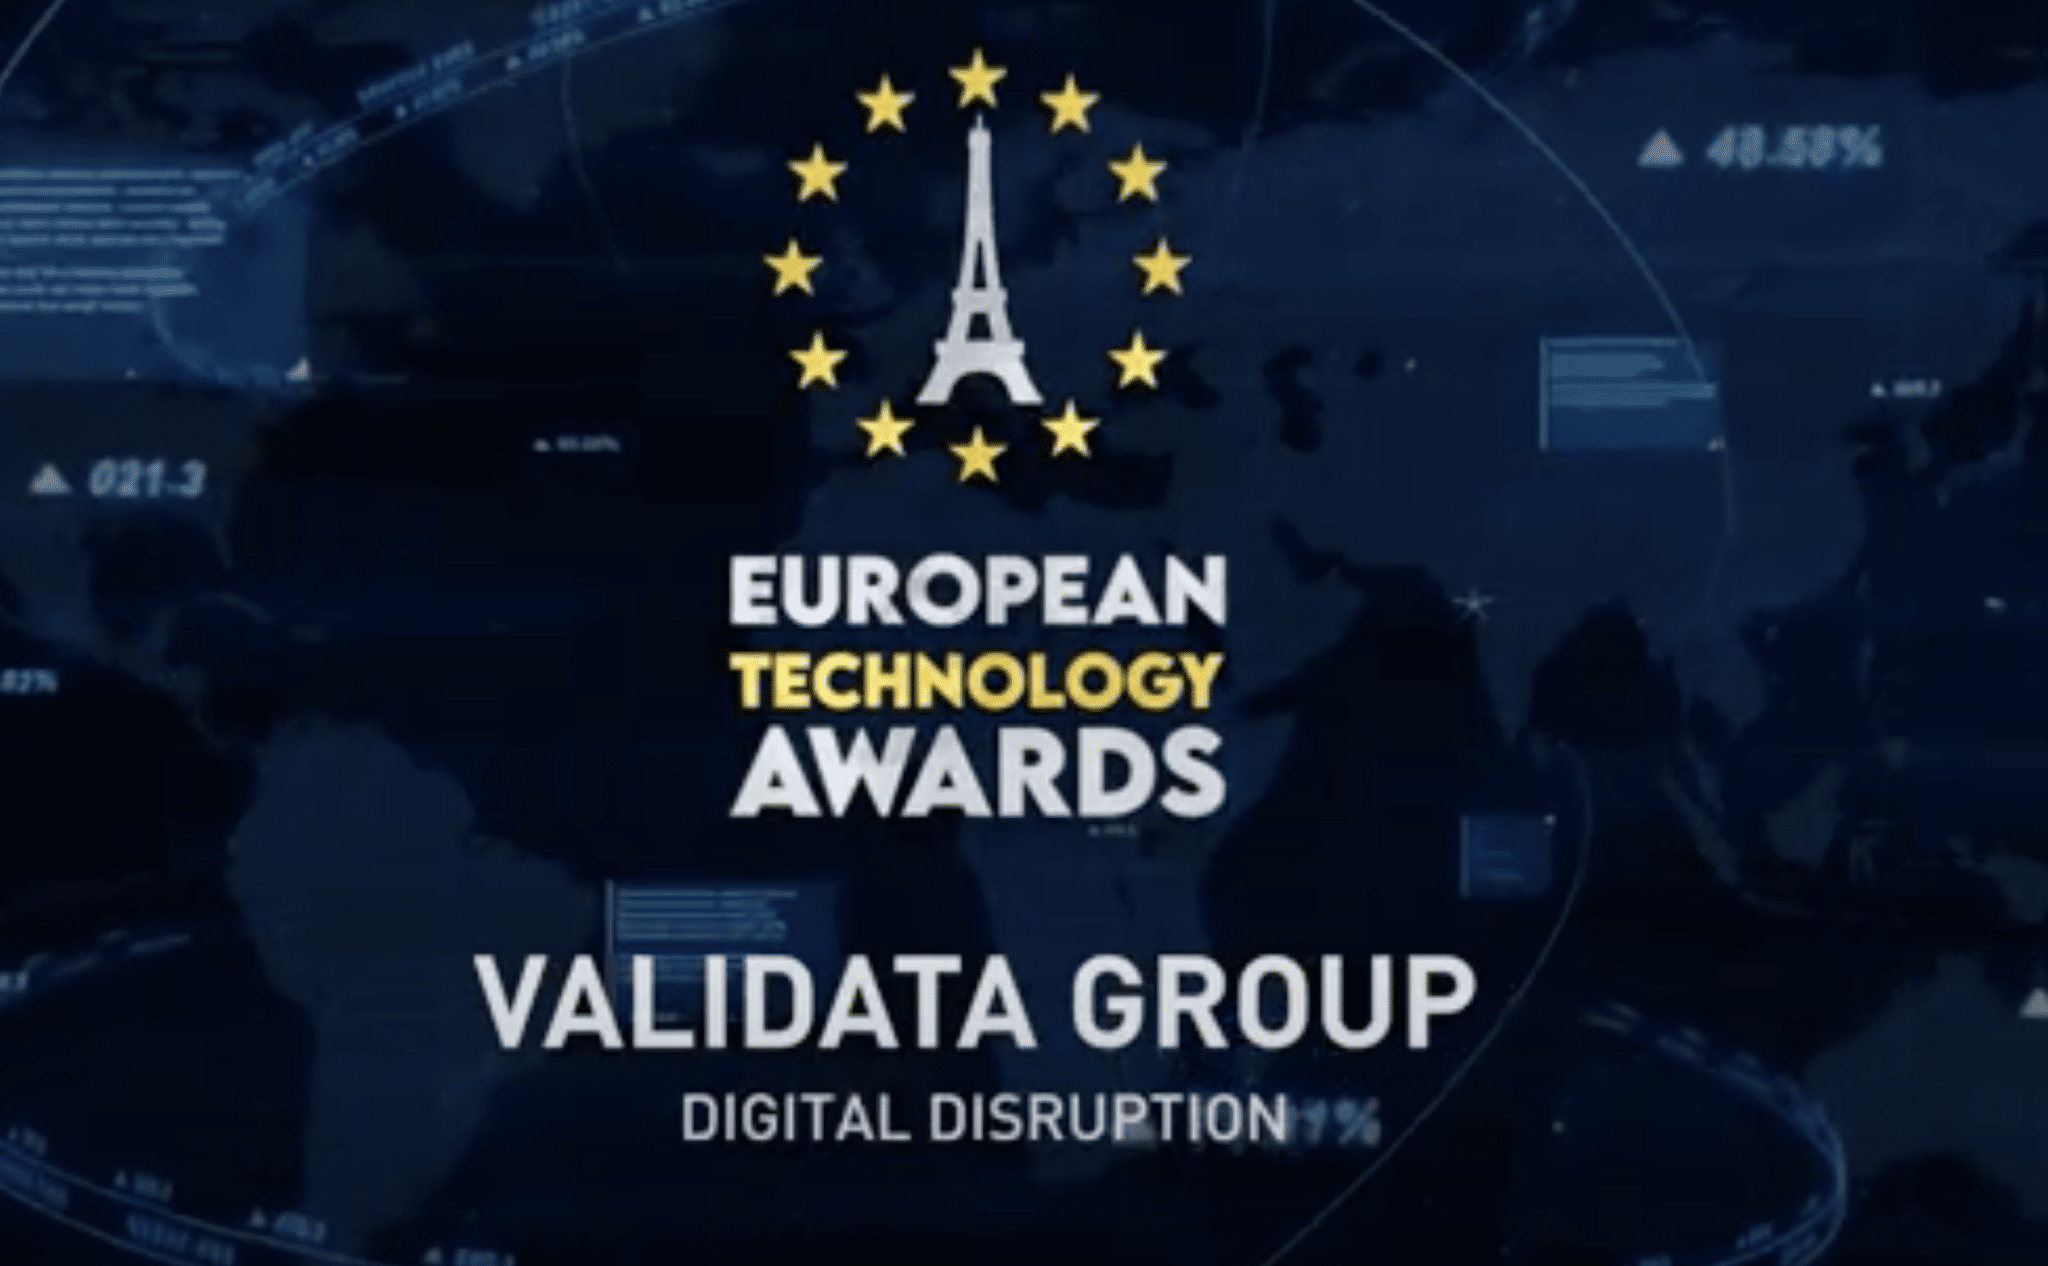 European technology awards - Validata group - digital disruption